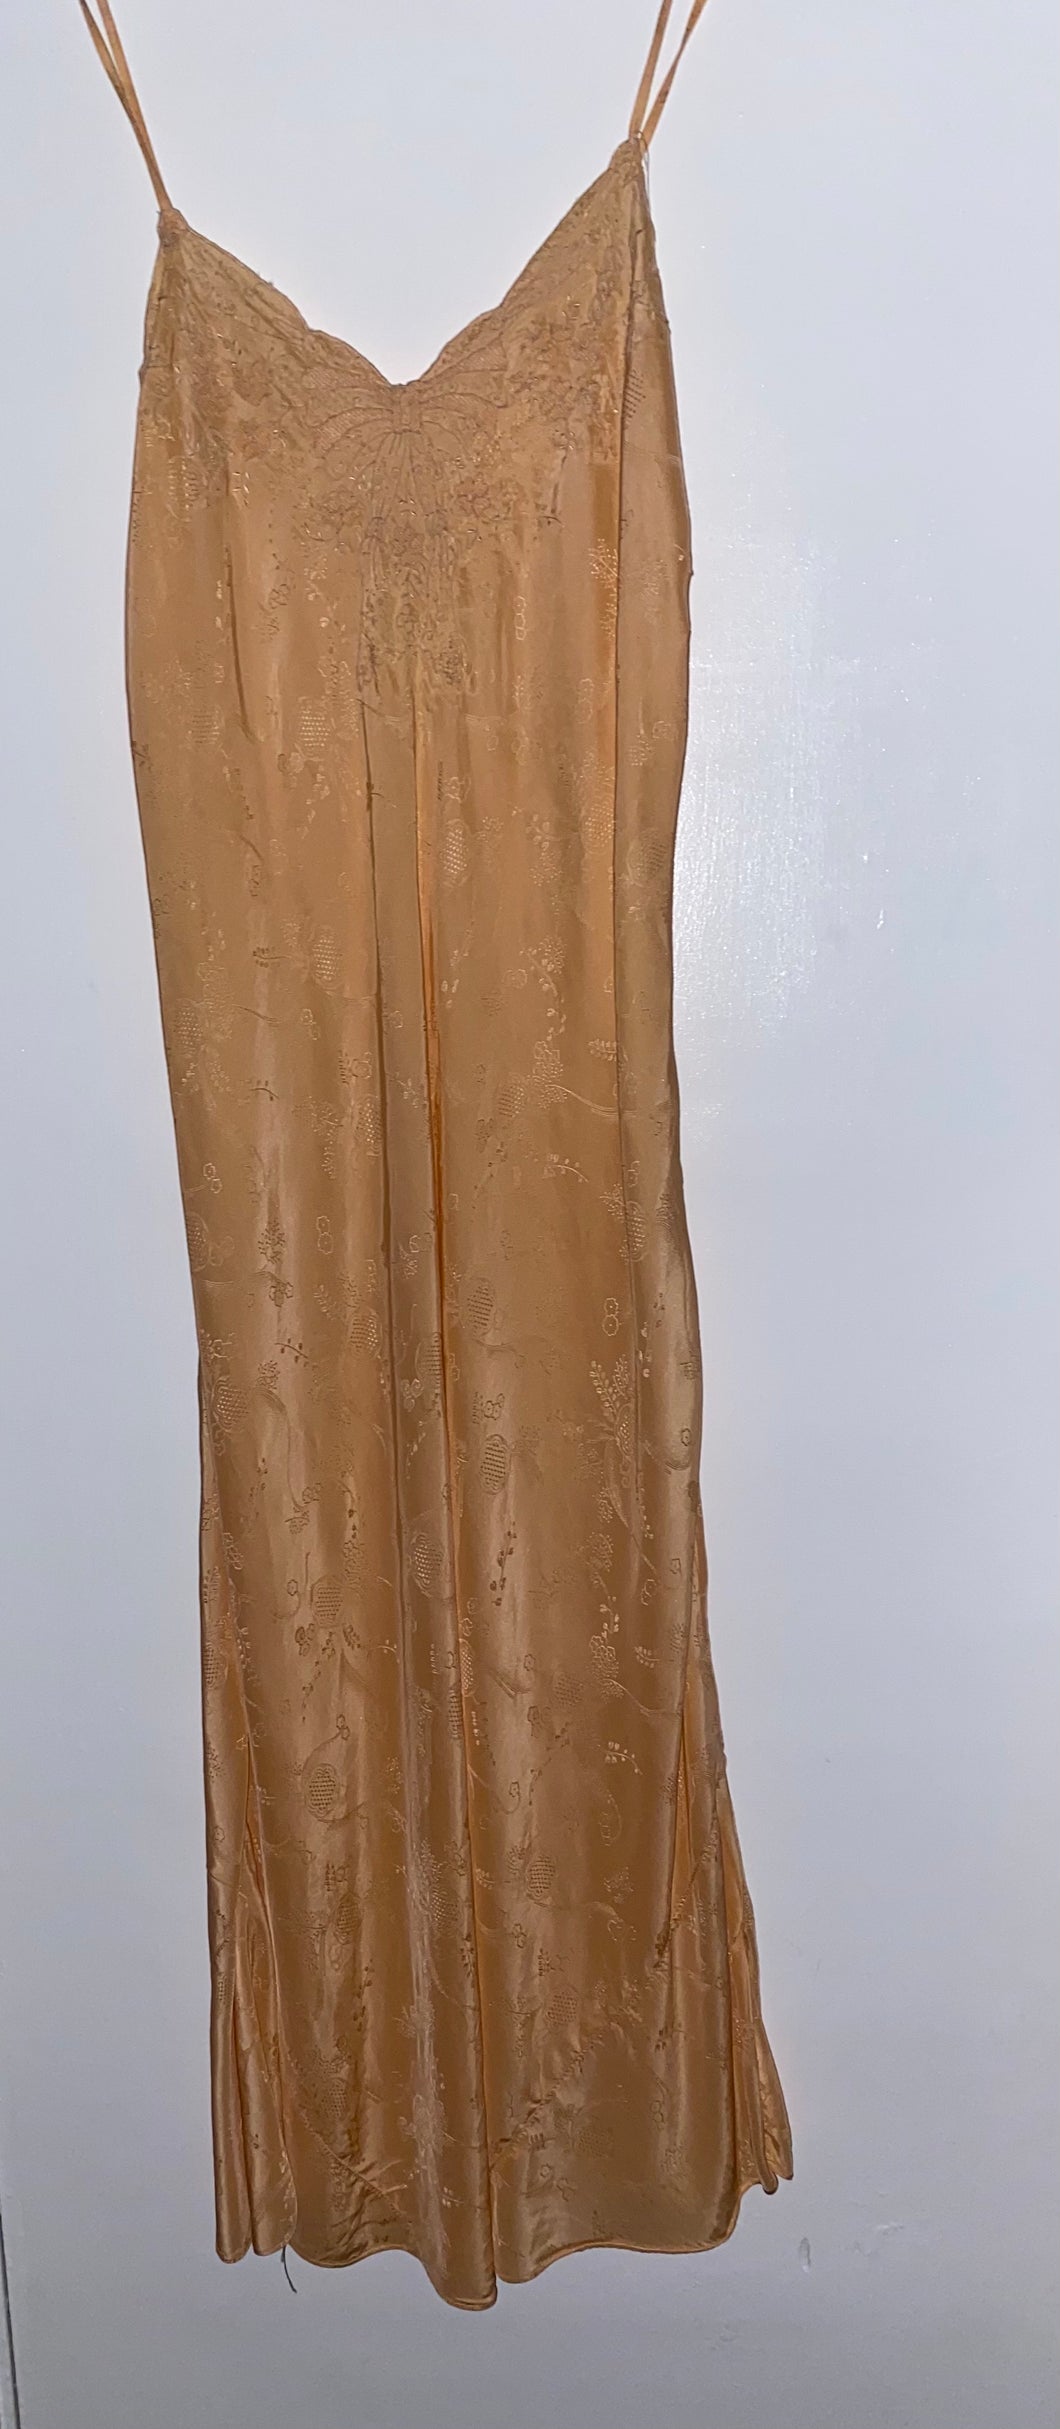 Exquisite peach silk embroidered night gown/ slip / dress